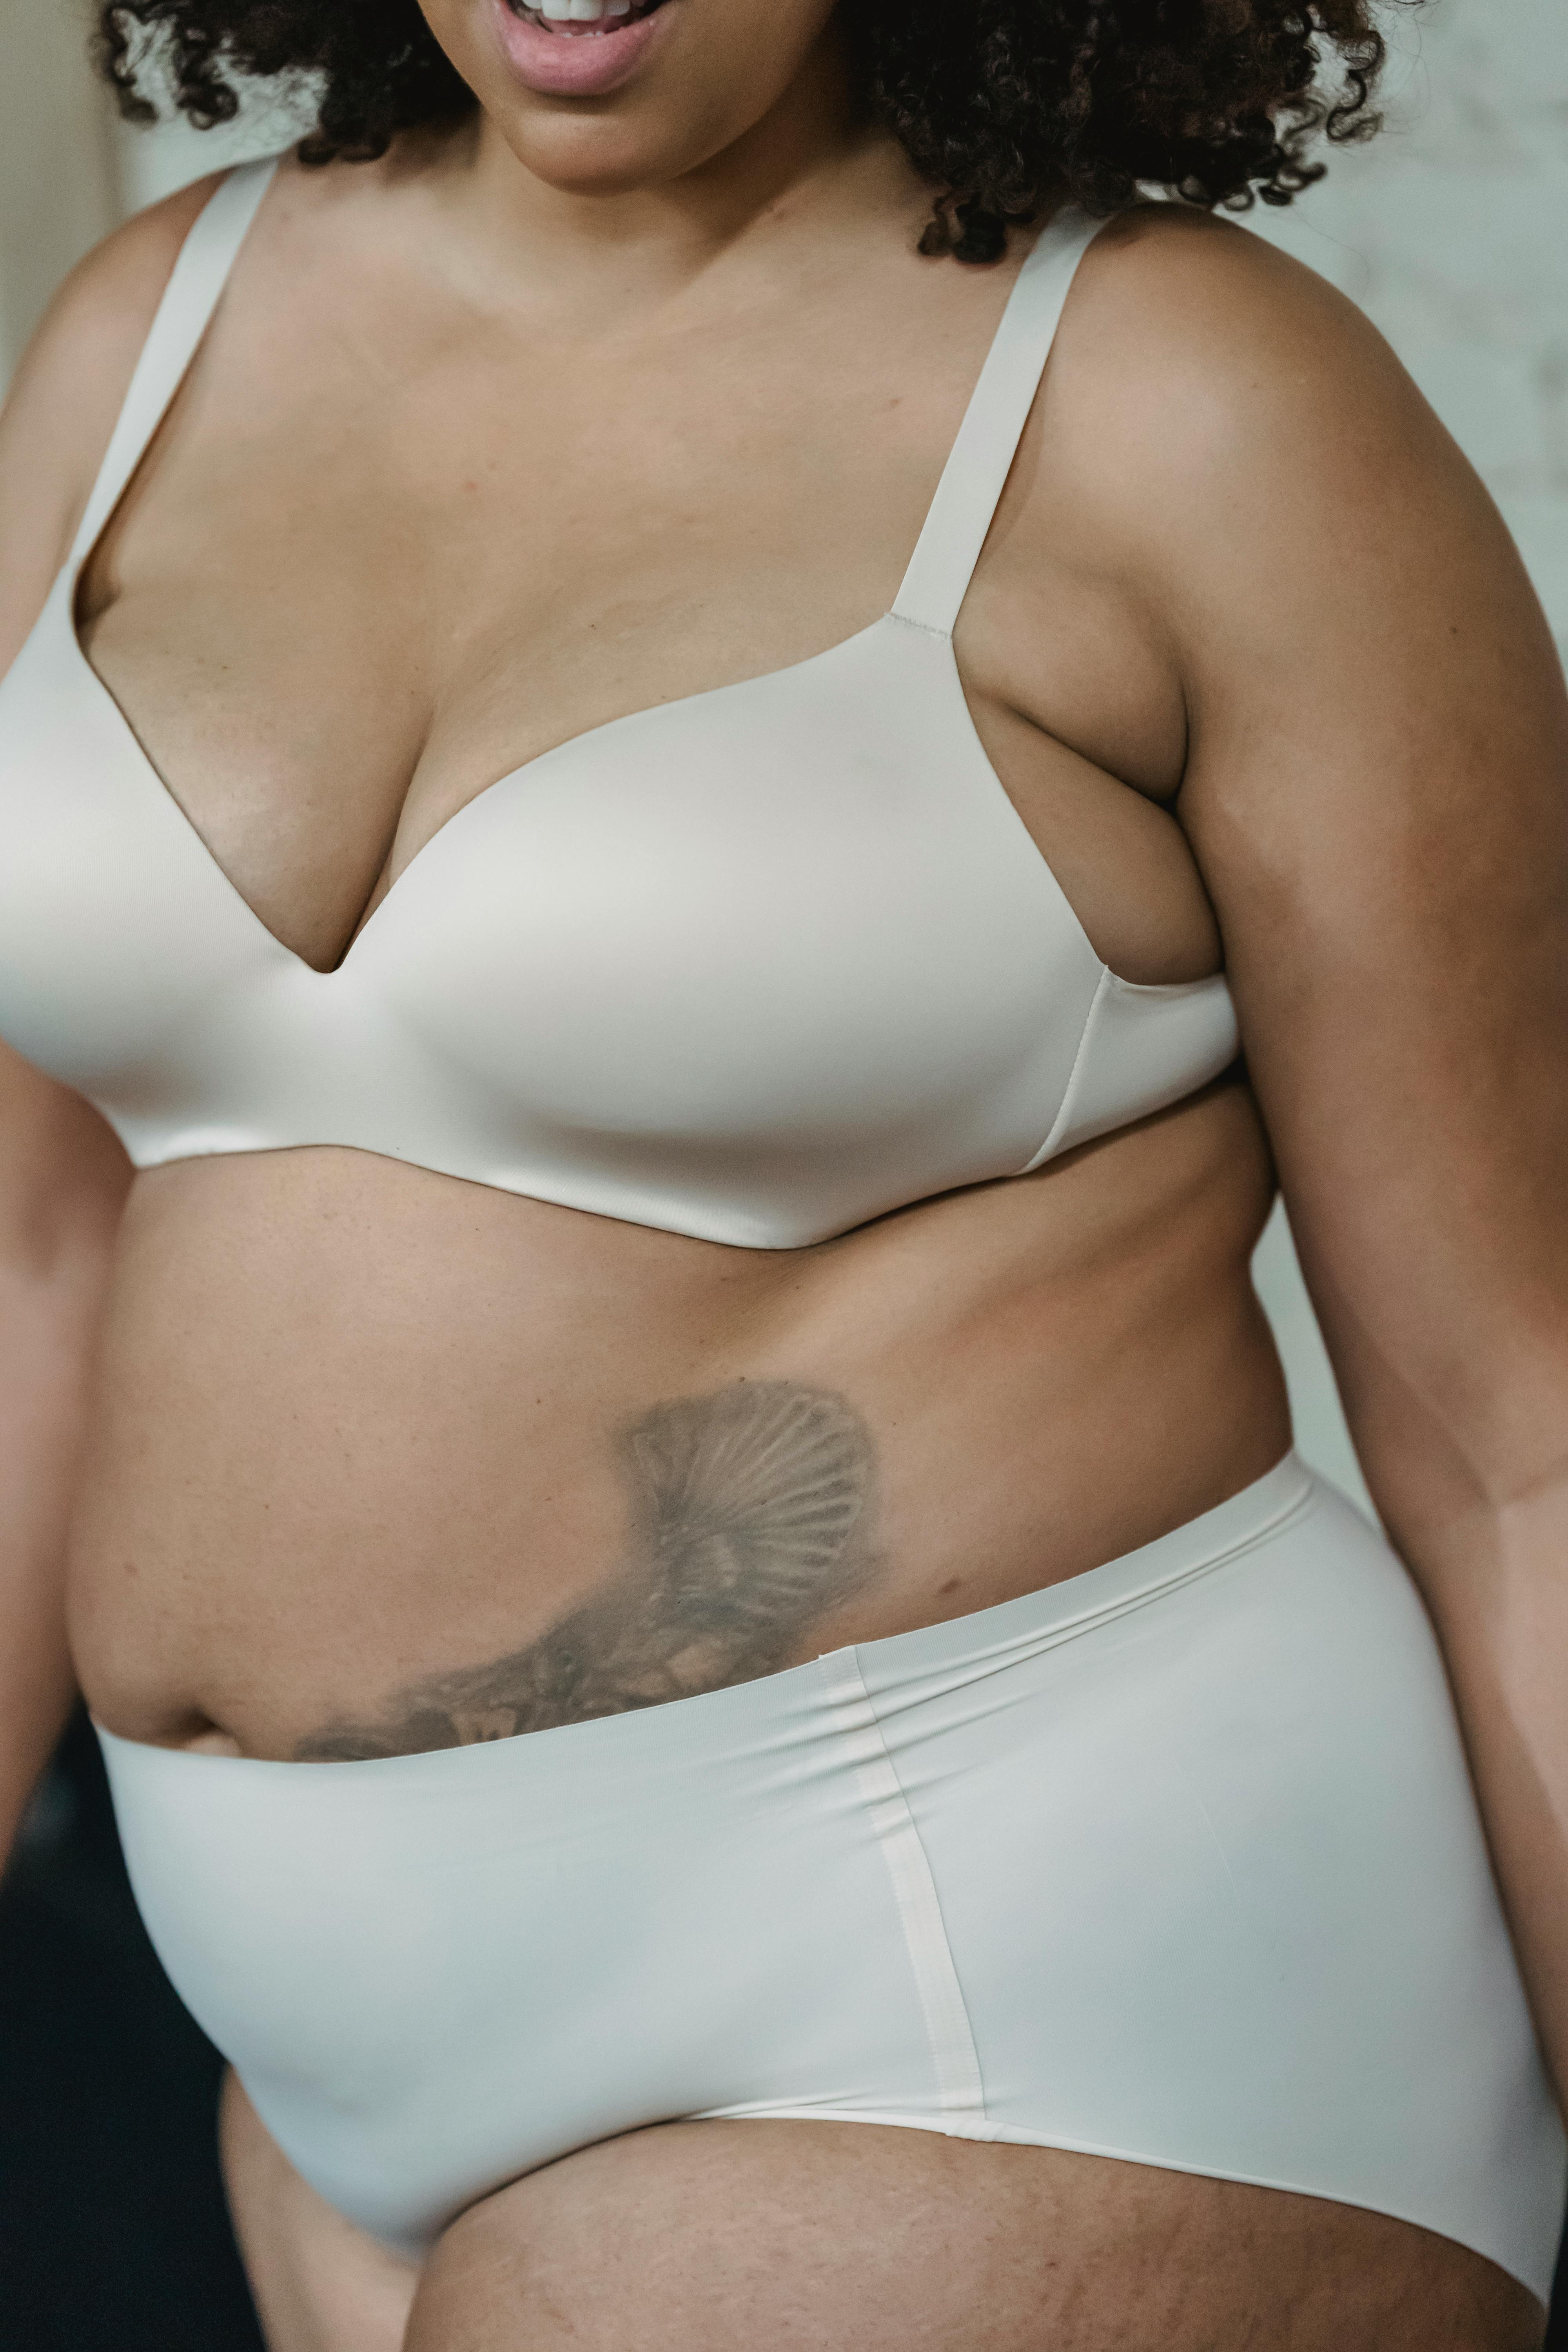 Crop unrecognizable black woman in bodysuit touching breast